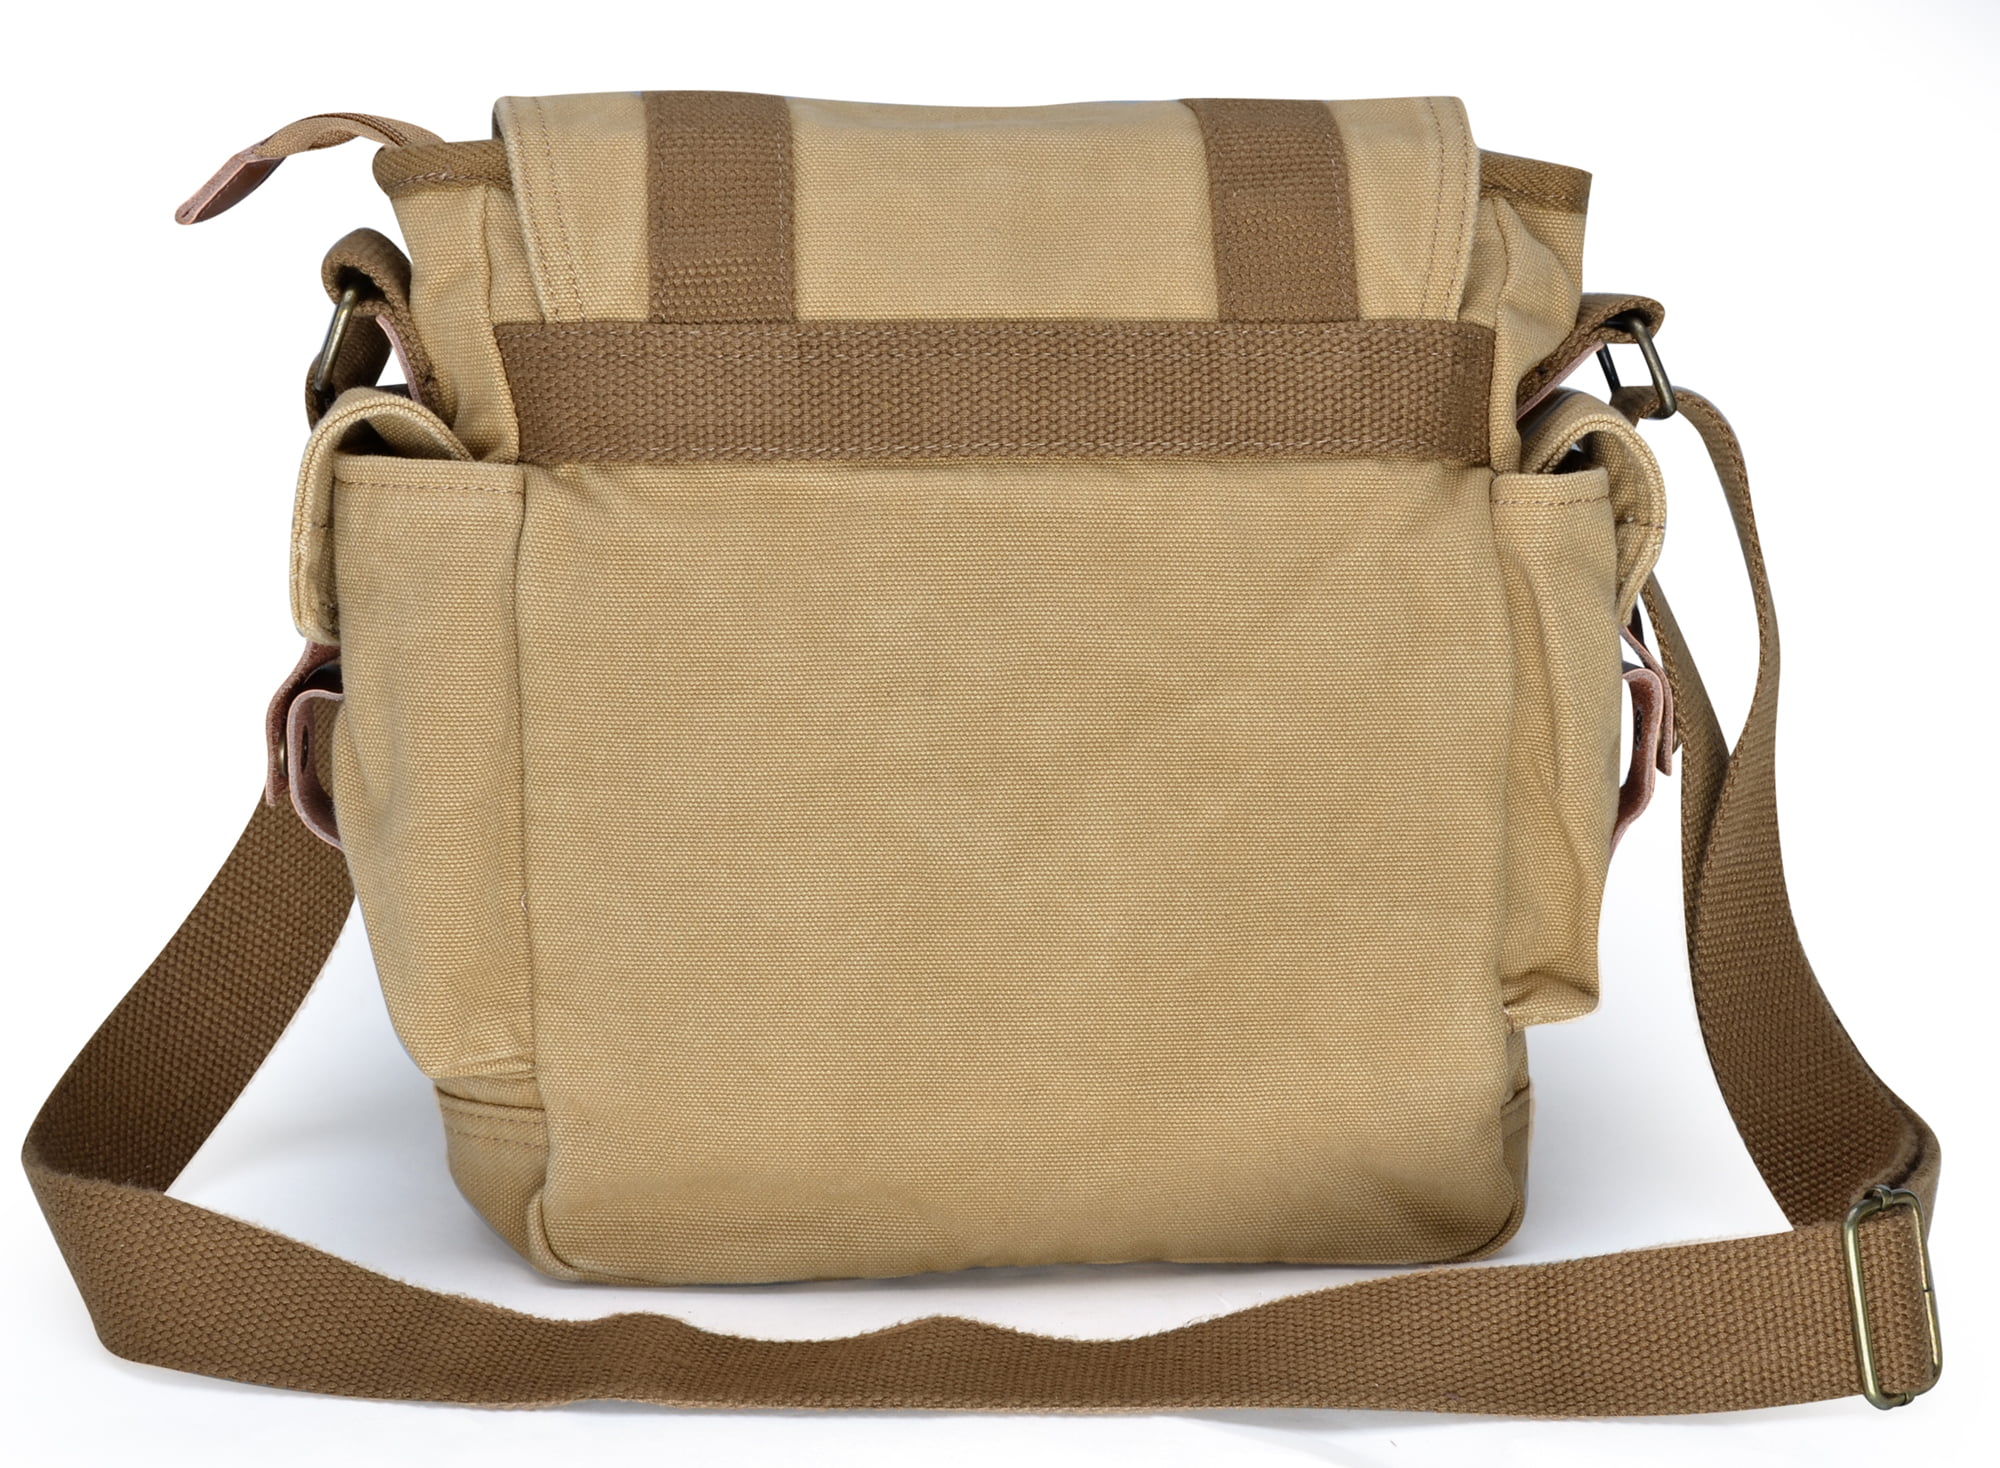 Gootium Vintage Canvas Messenger Bag Small Shoulder Bag Crossbody Satchel, Army Green